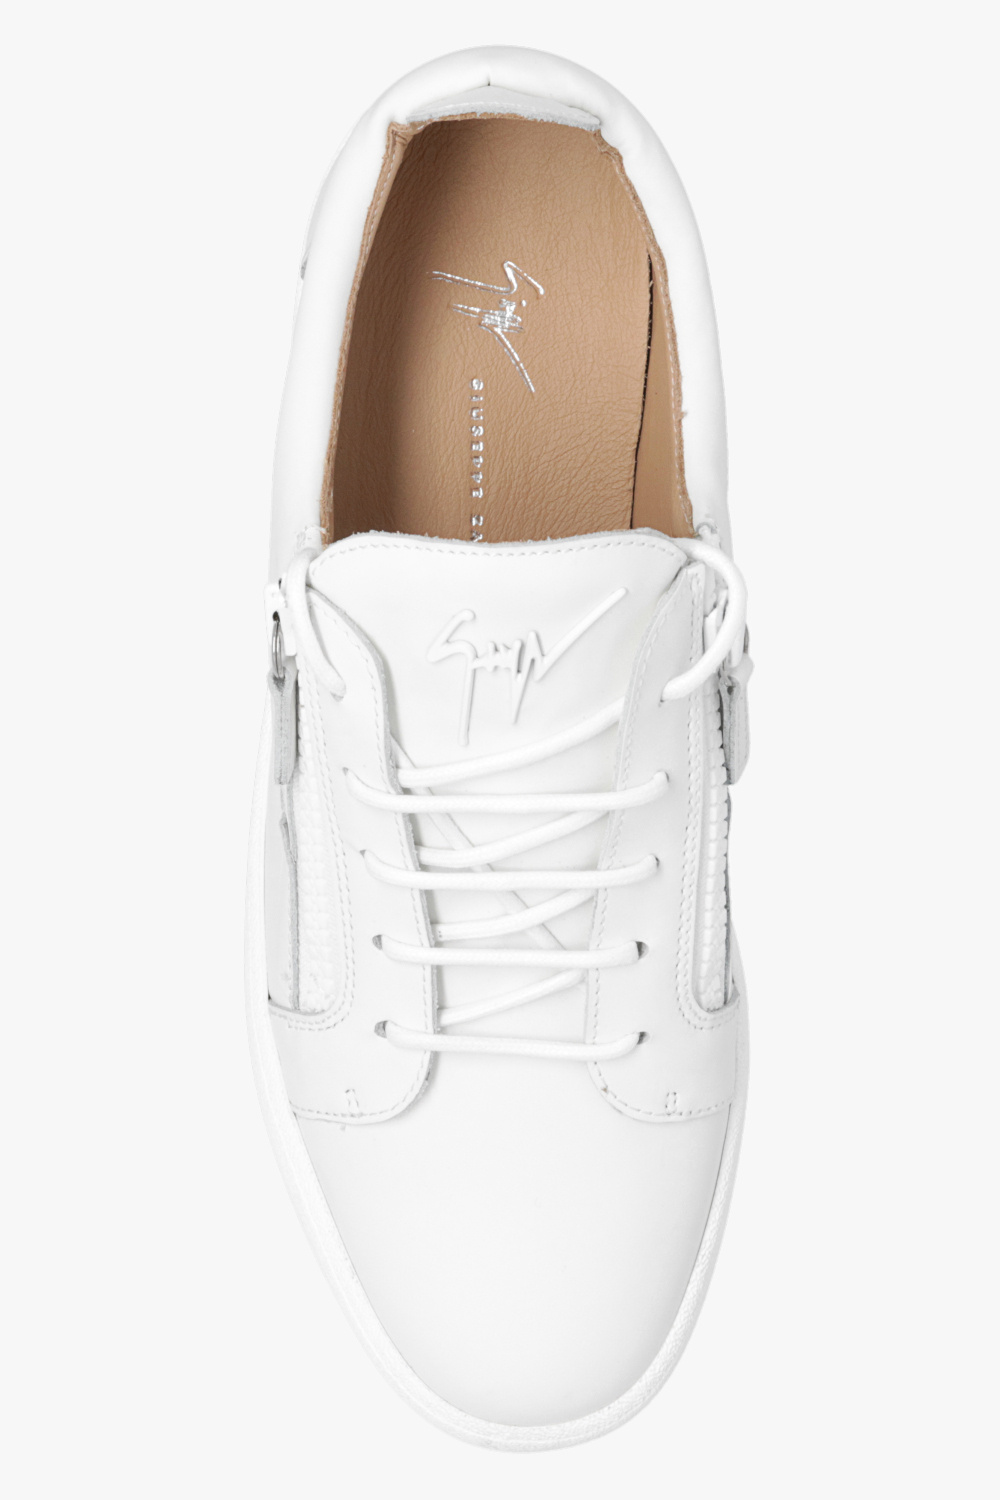 strap Blu Giuseppe Zanotti - Flor double - Nike air jordan low x chanel abney womens shoes white dq0560-160 - IetpShops Canada - Kids Birko